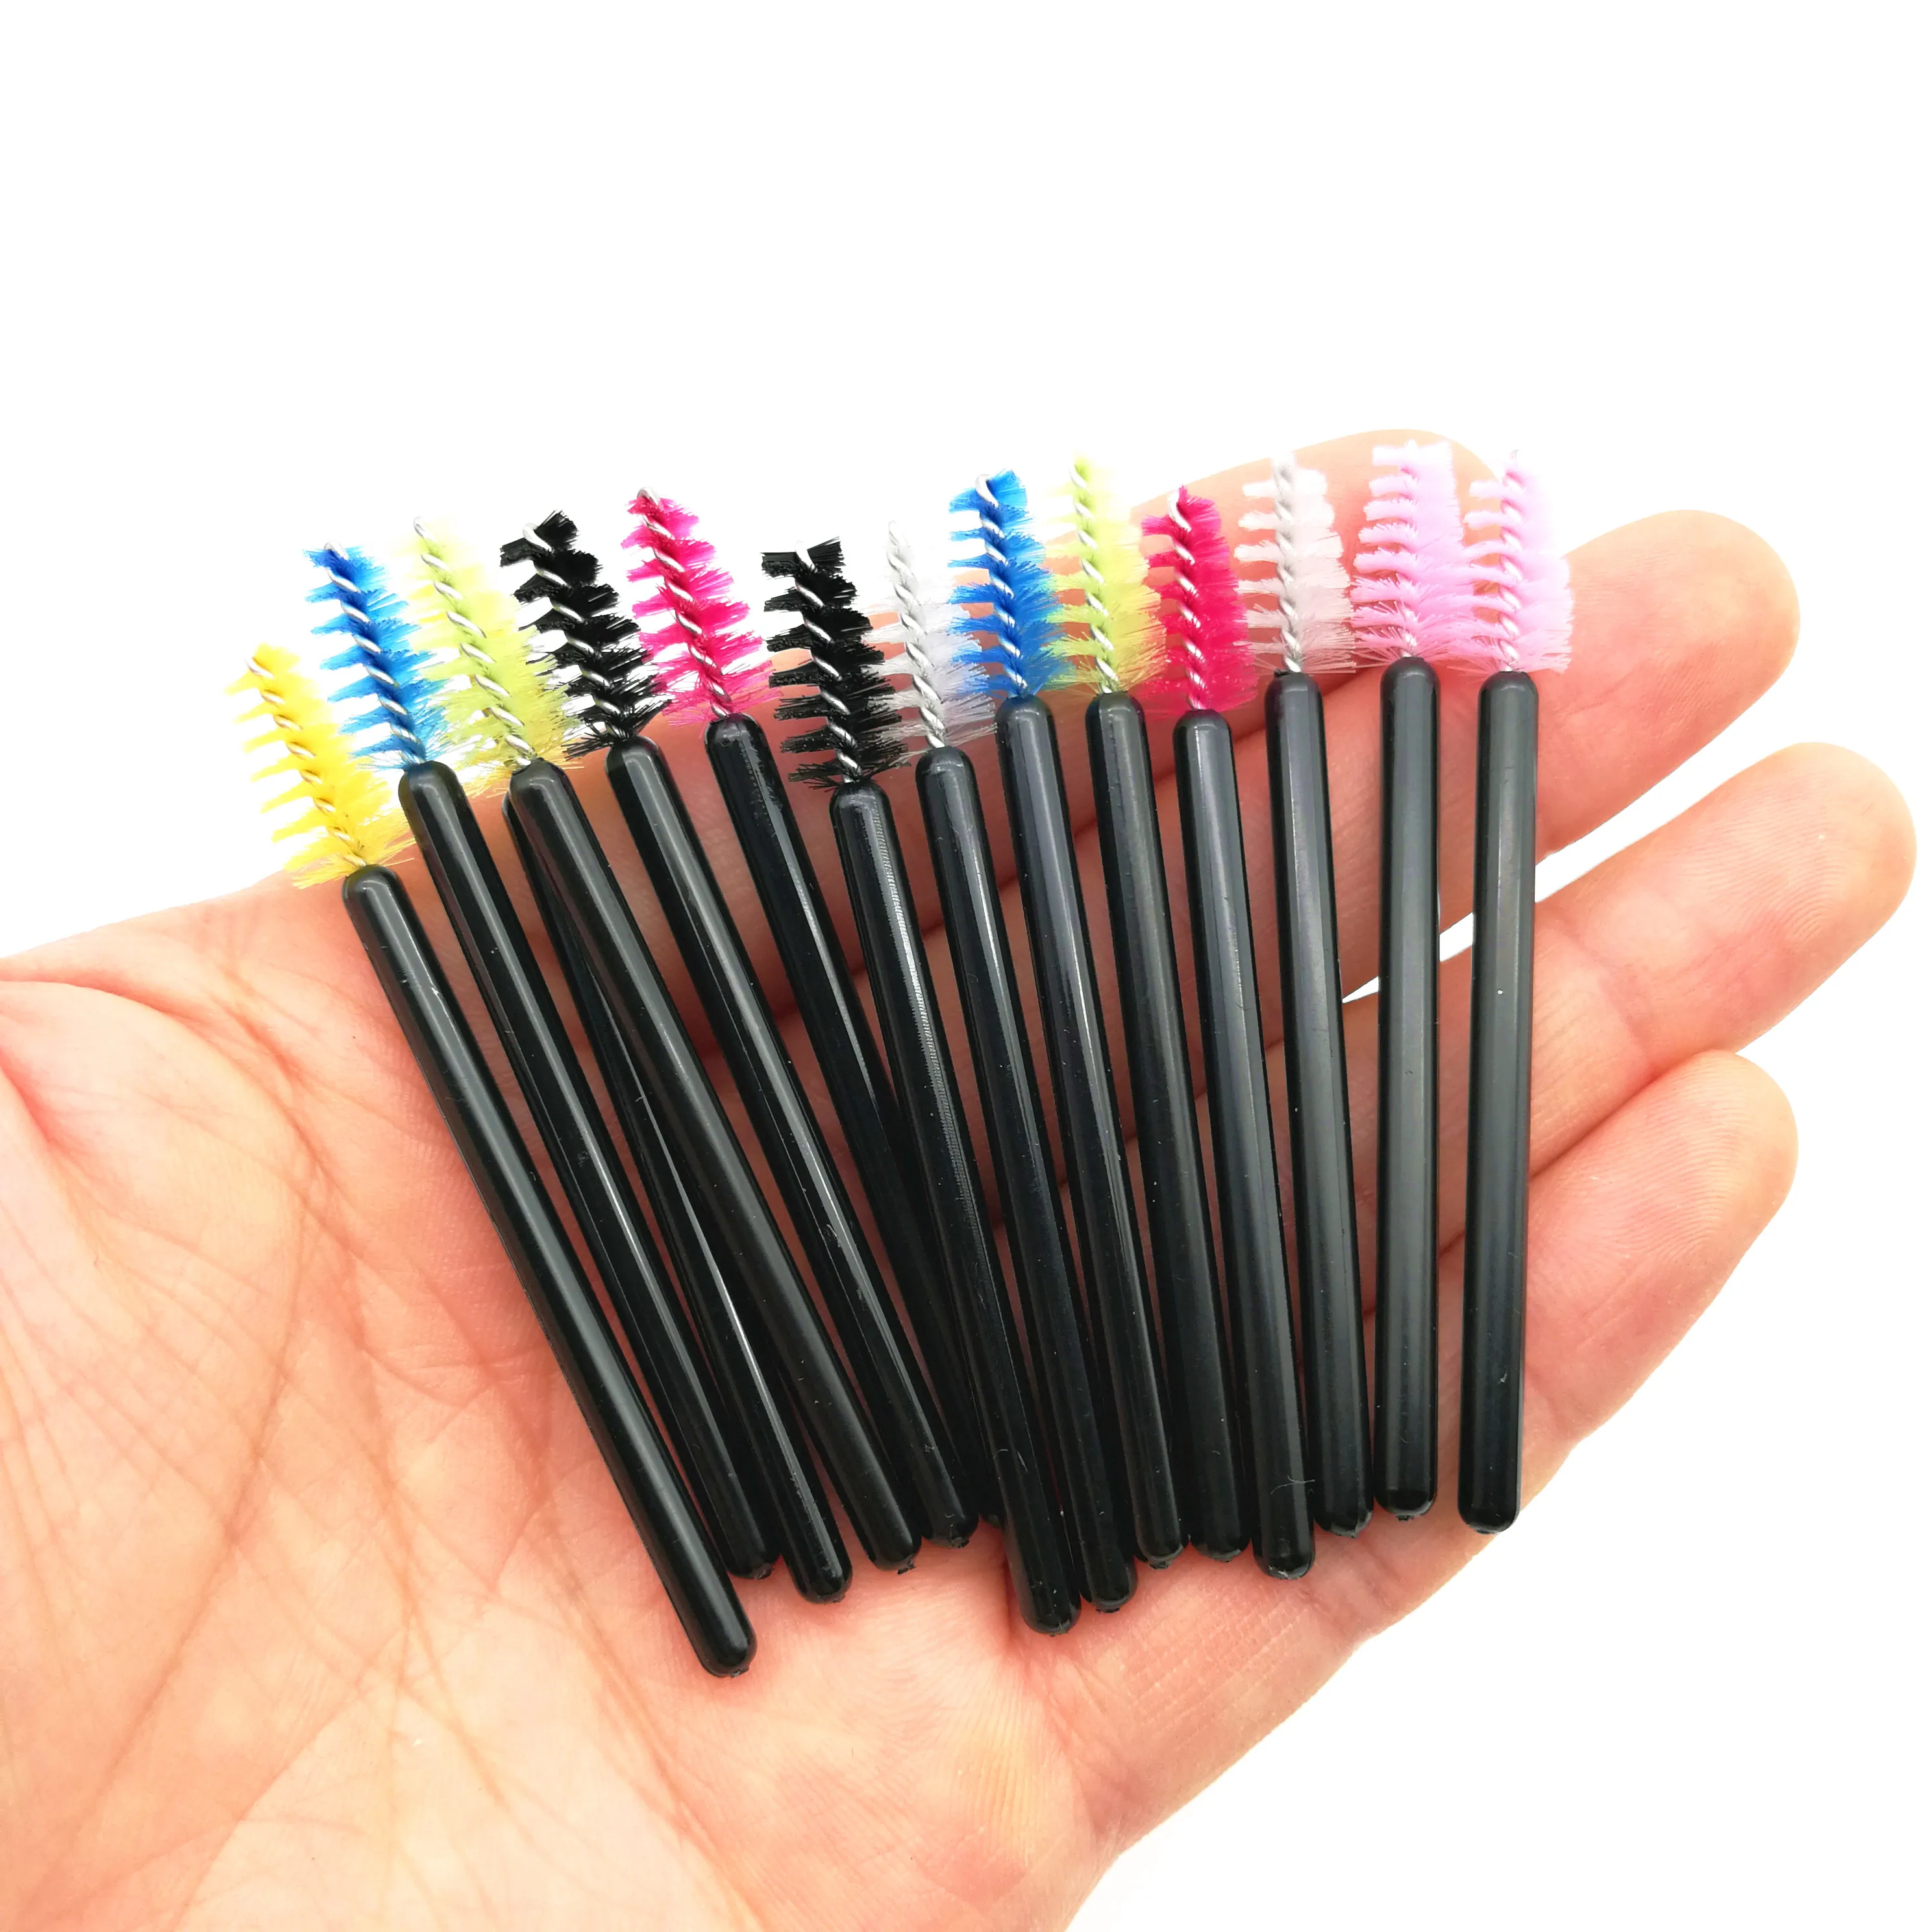 

Mini mascara wand brushes eyelash extension eye lash micro brush applicator spoolies, White,black, red, blue, purple, green etc